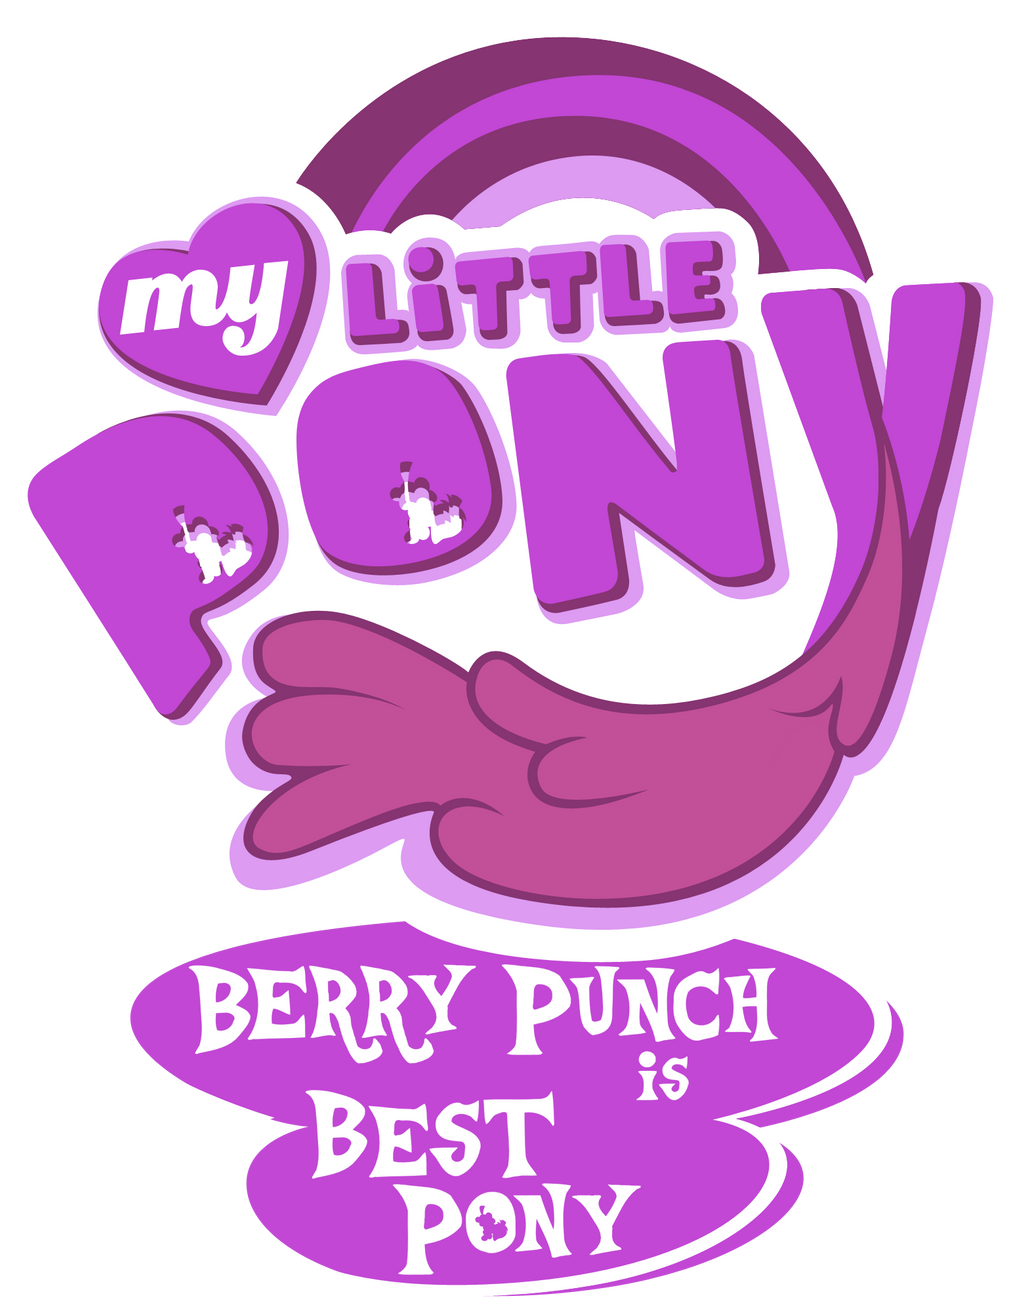 Fanart - MLP. My Little Pony Logo - Berry Punch by jamescorck on DeviantArt